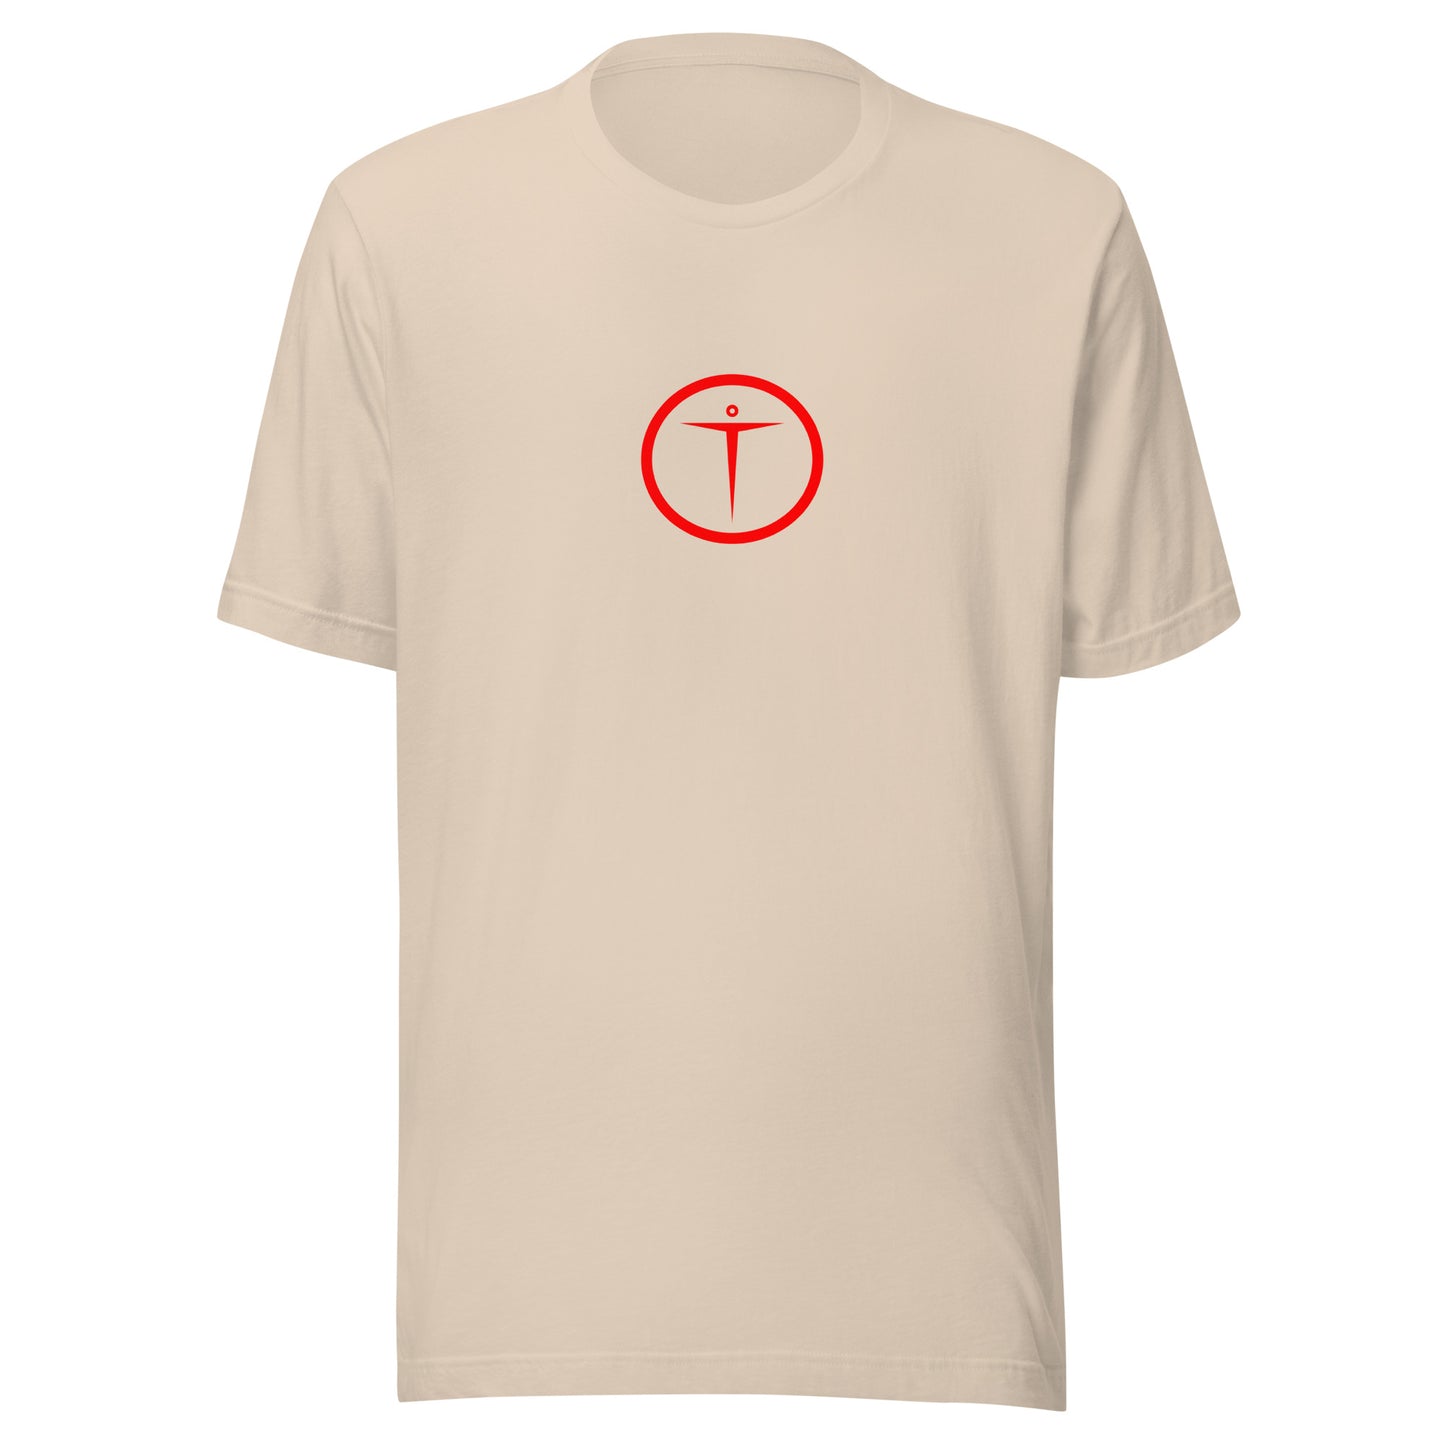 TORAYON (R) Unisex t-shirt